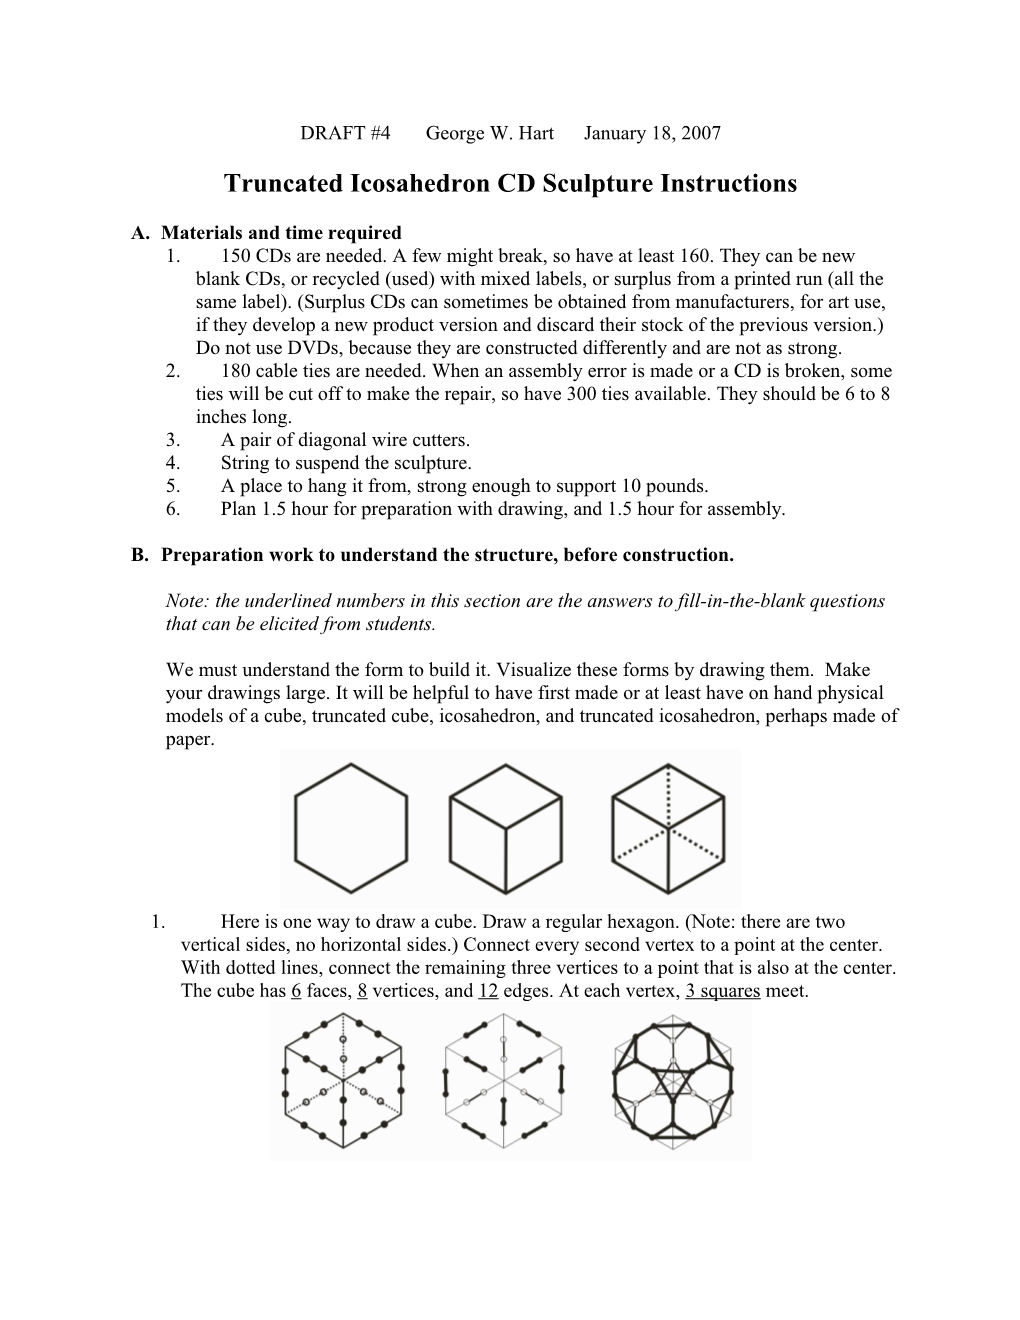 Truncated Icosahedron CD Sculpture Instructions